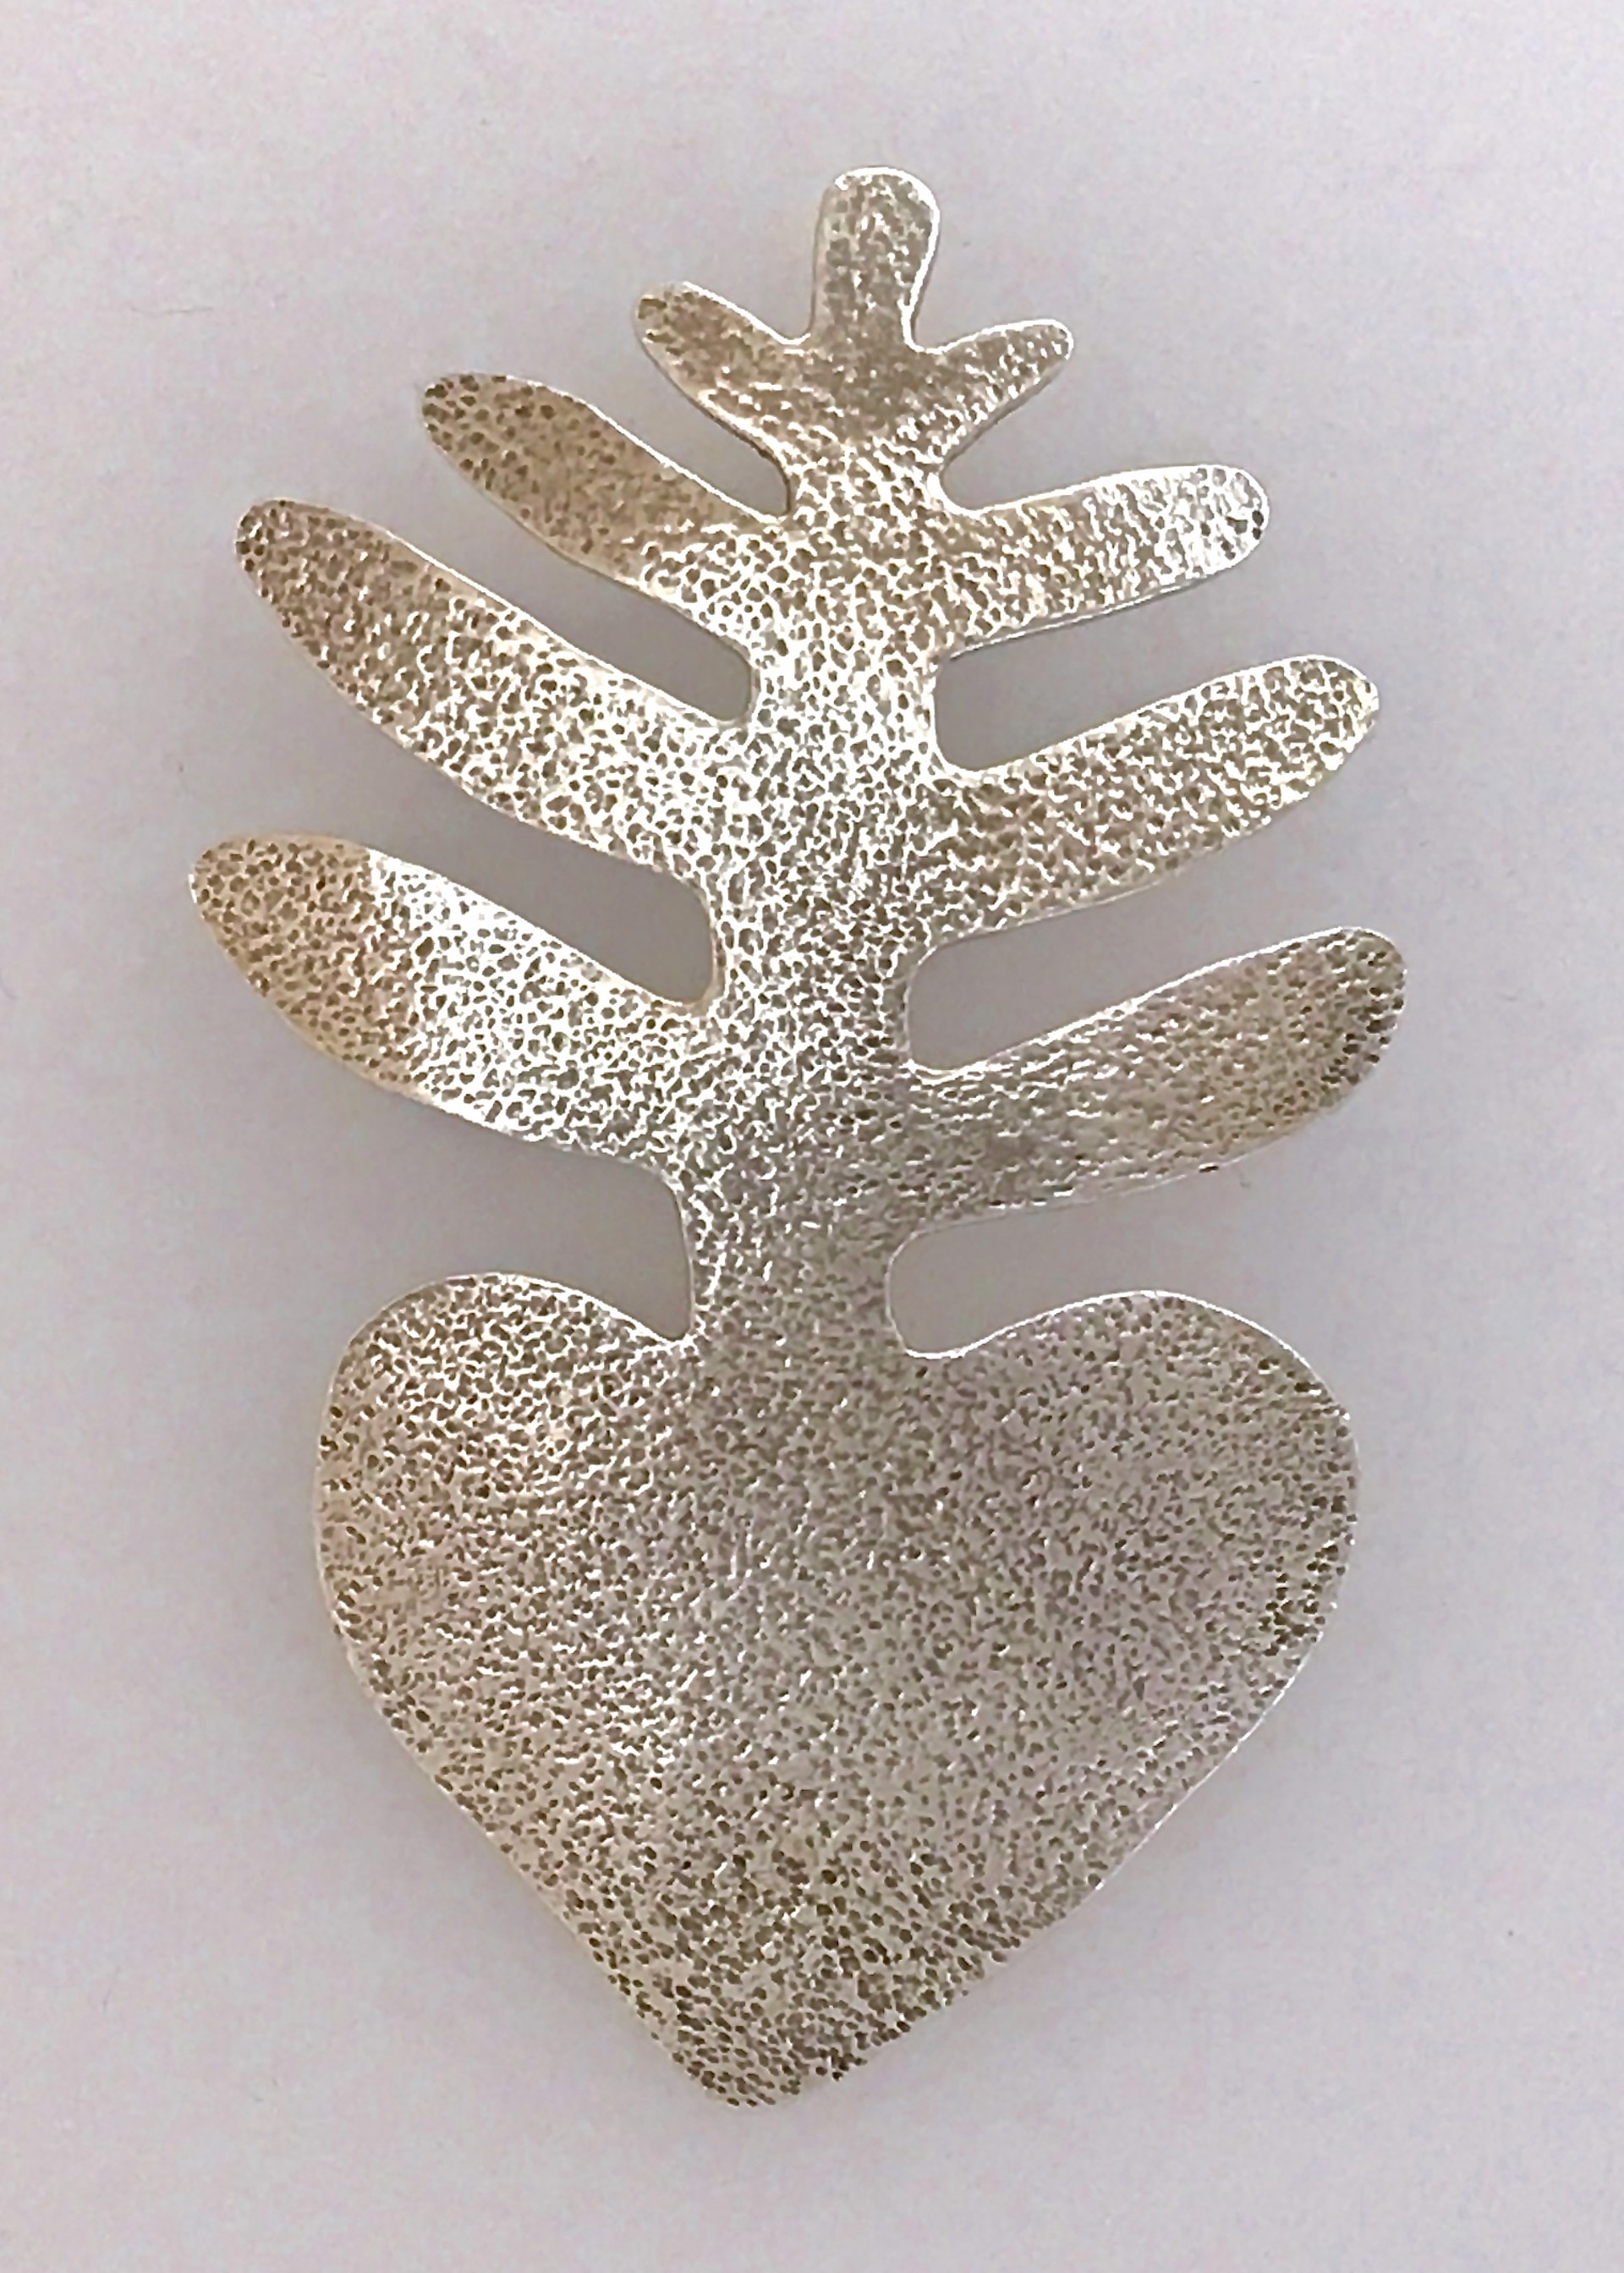 Heart Plant Pendant large by Melanie Yazzie